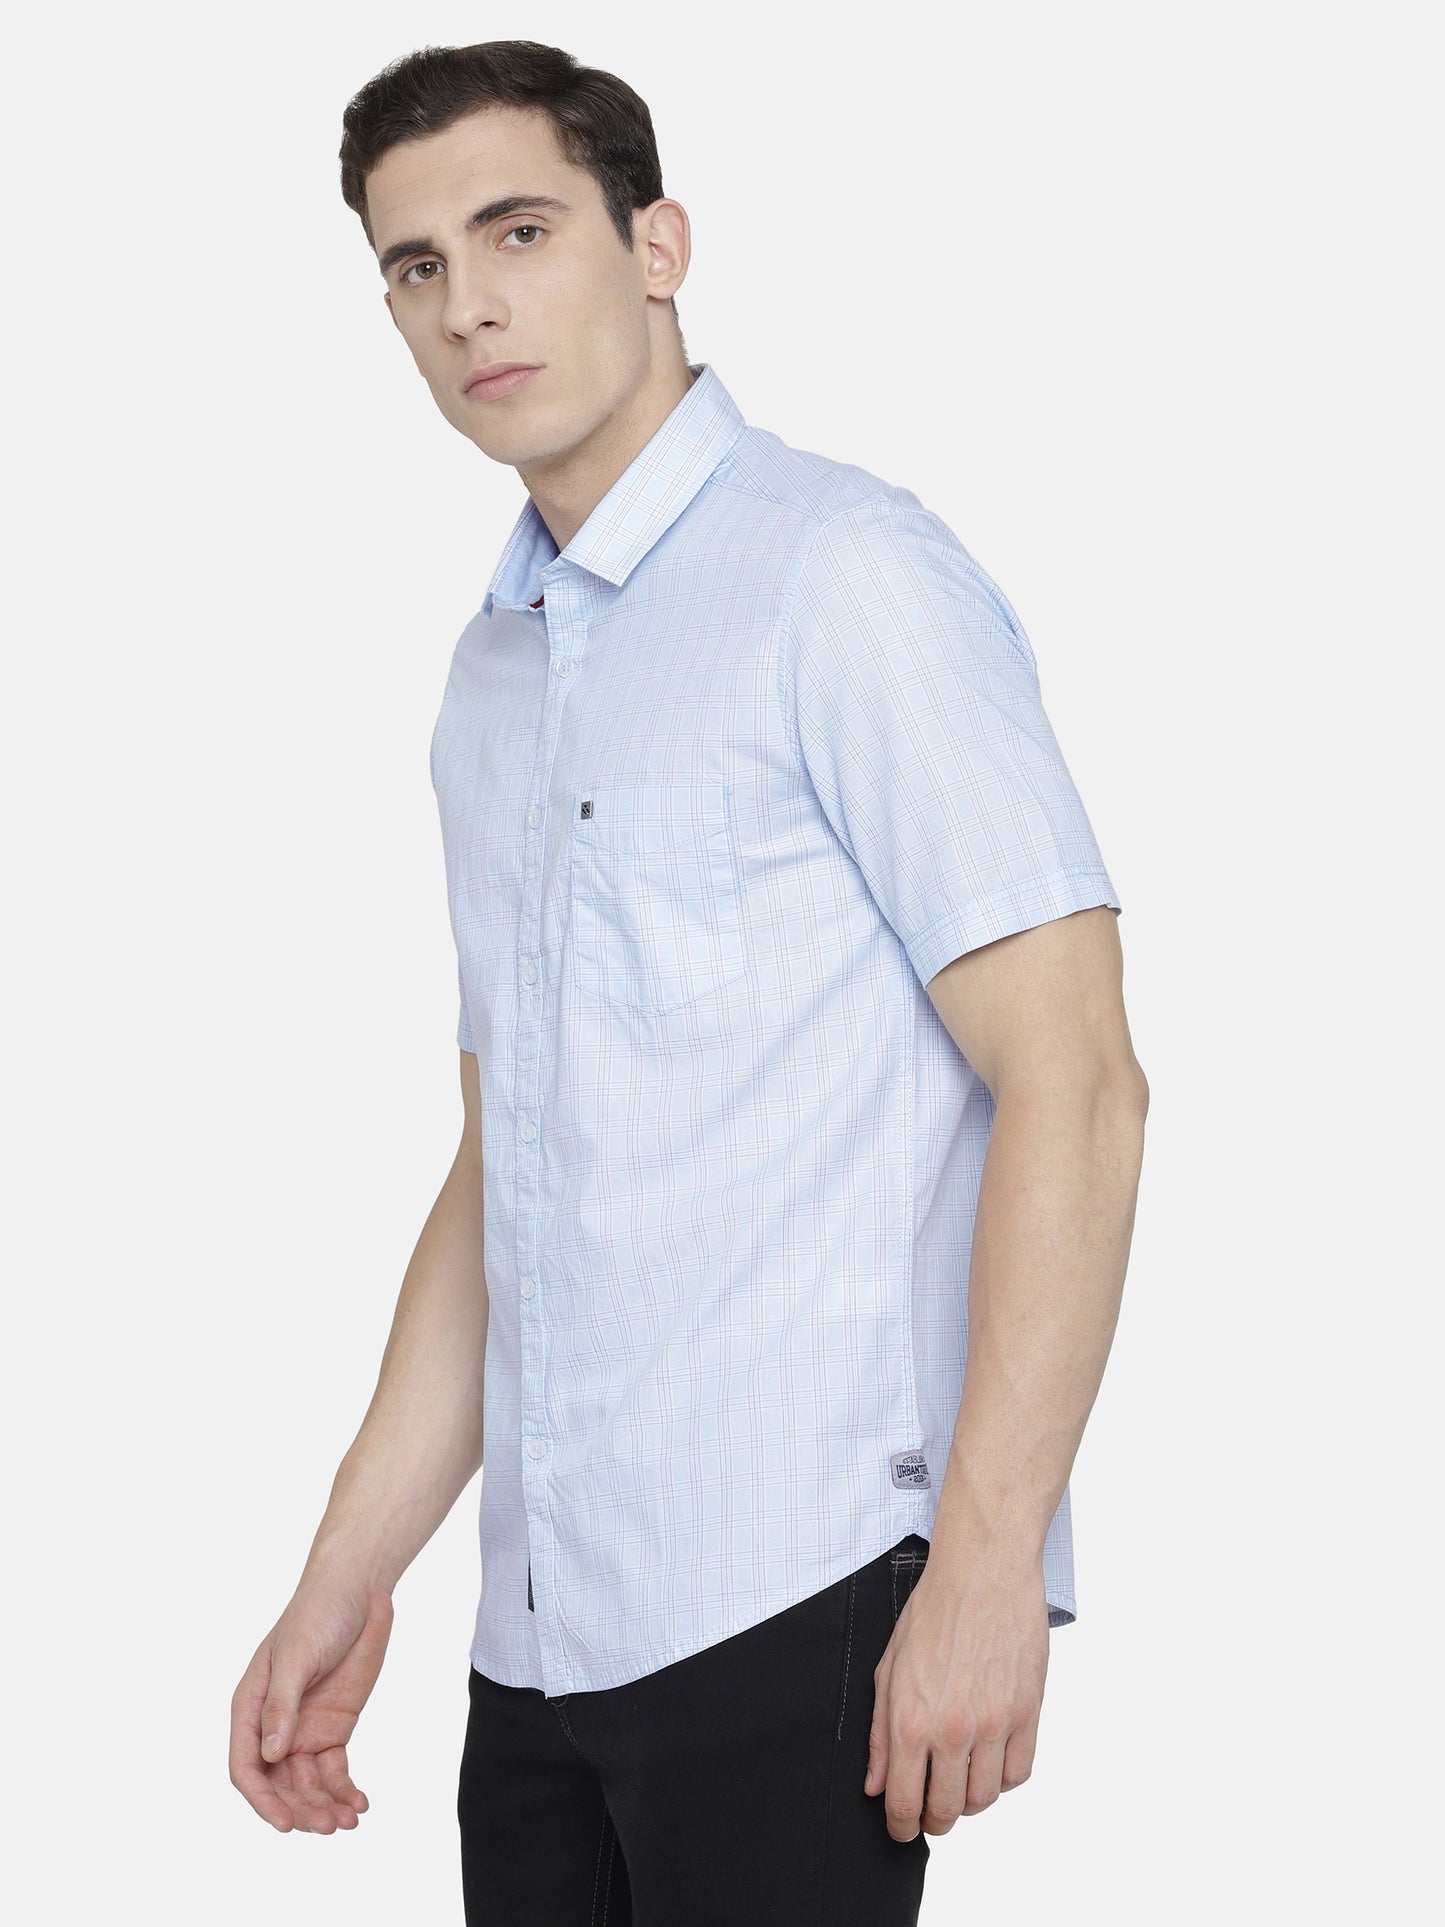 White and Light Blue Checkered Shirt